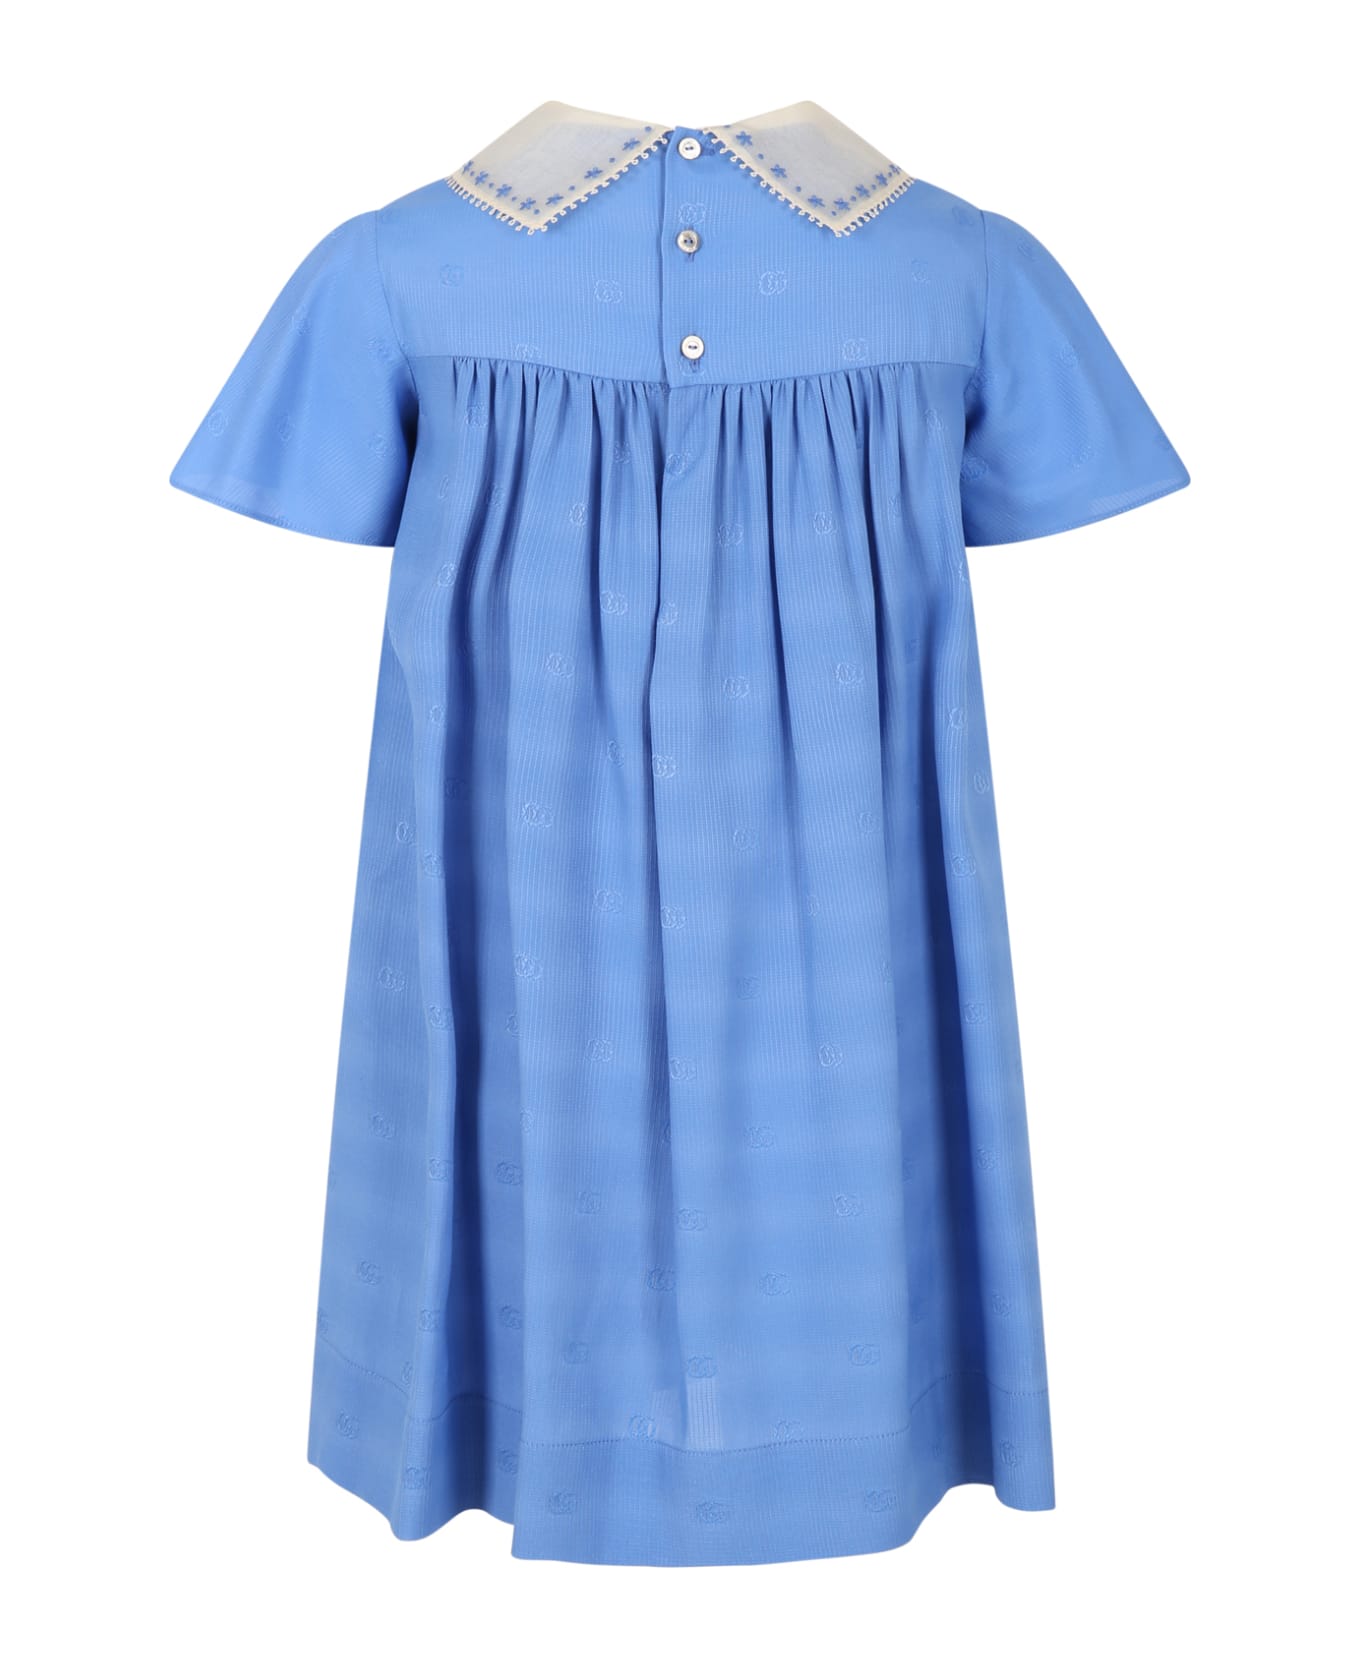 Gucci bague Light-blue Dress For Girl With Gg - Light Blue